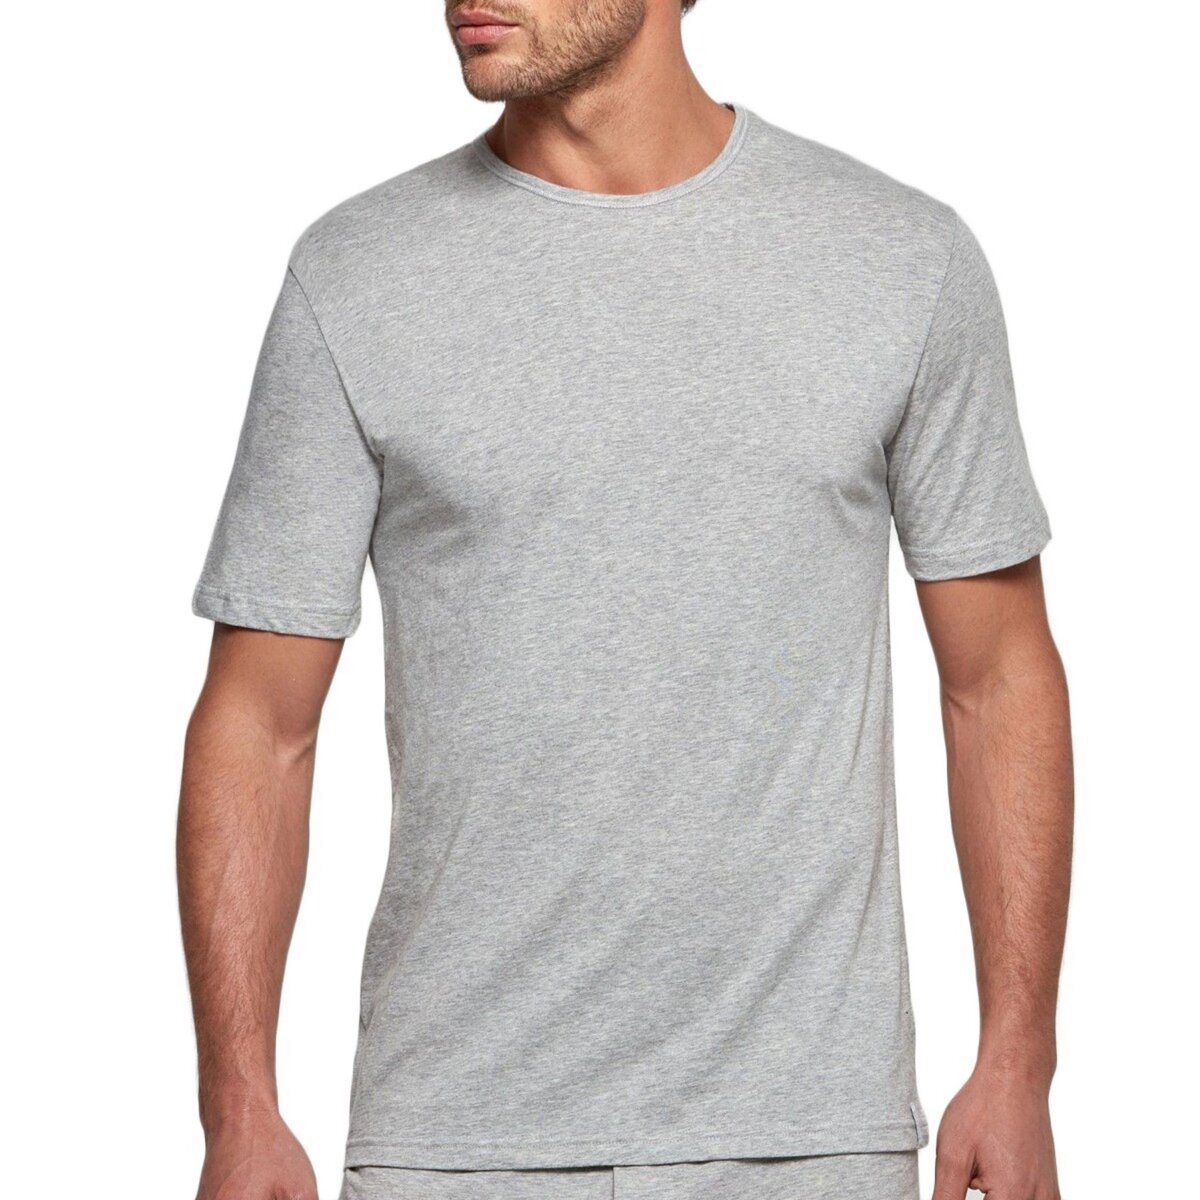  T-shirt homewear confort col rond Essentials gris